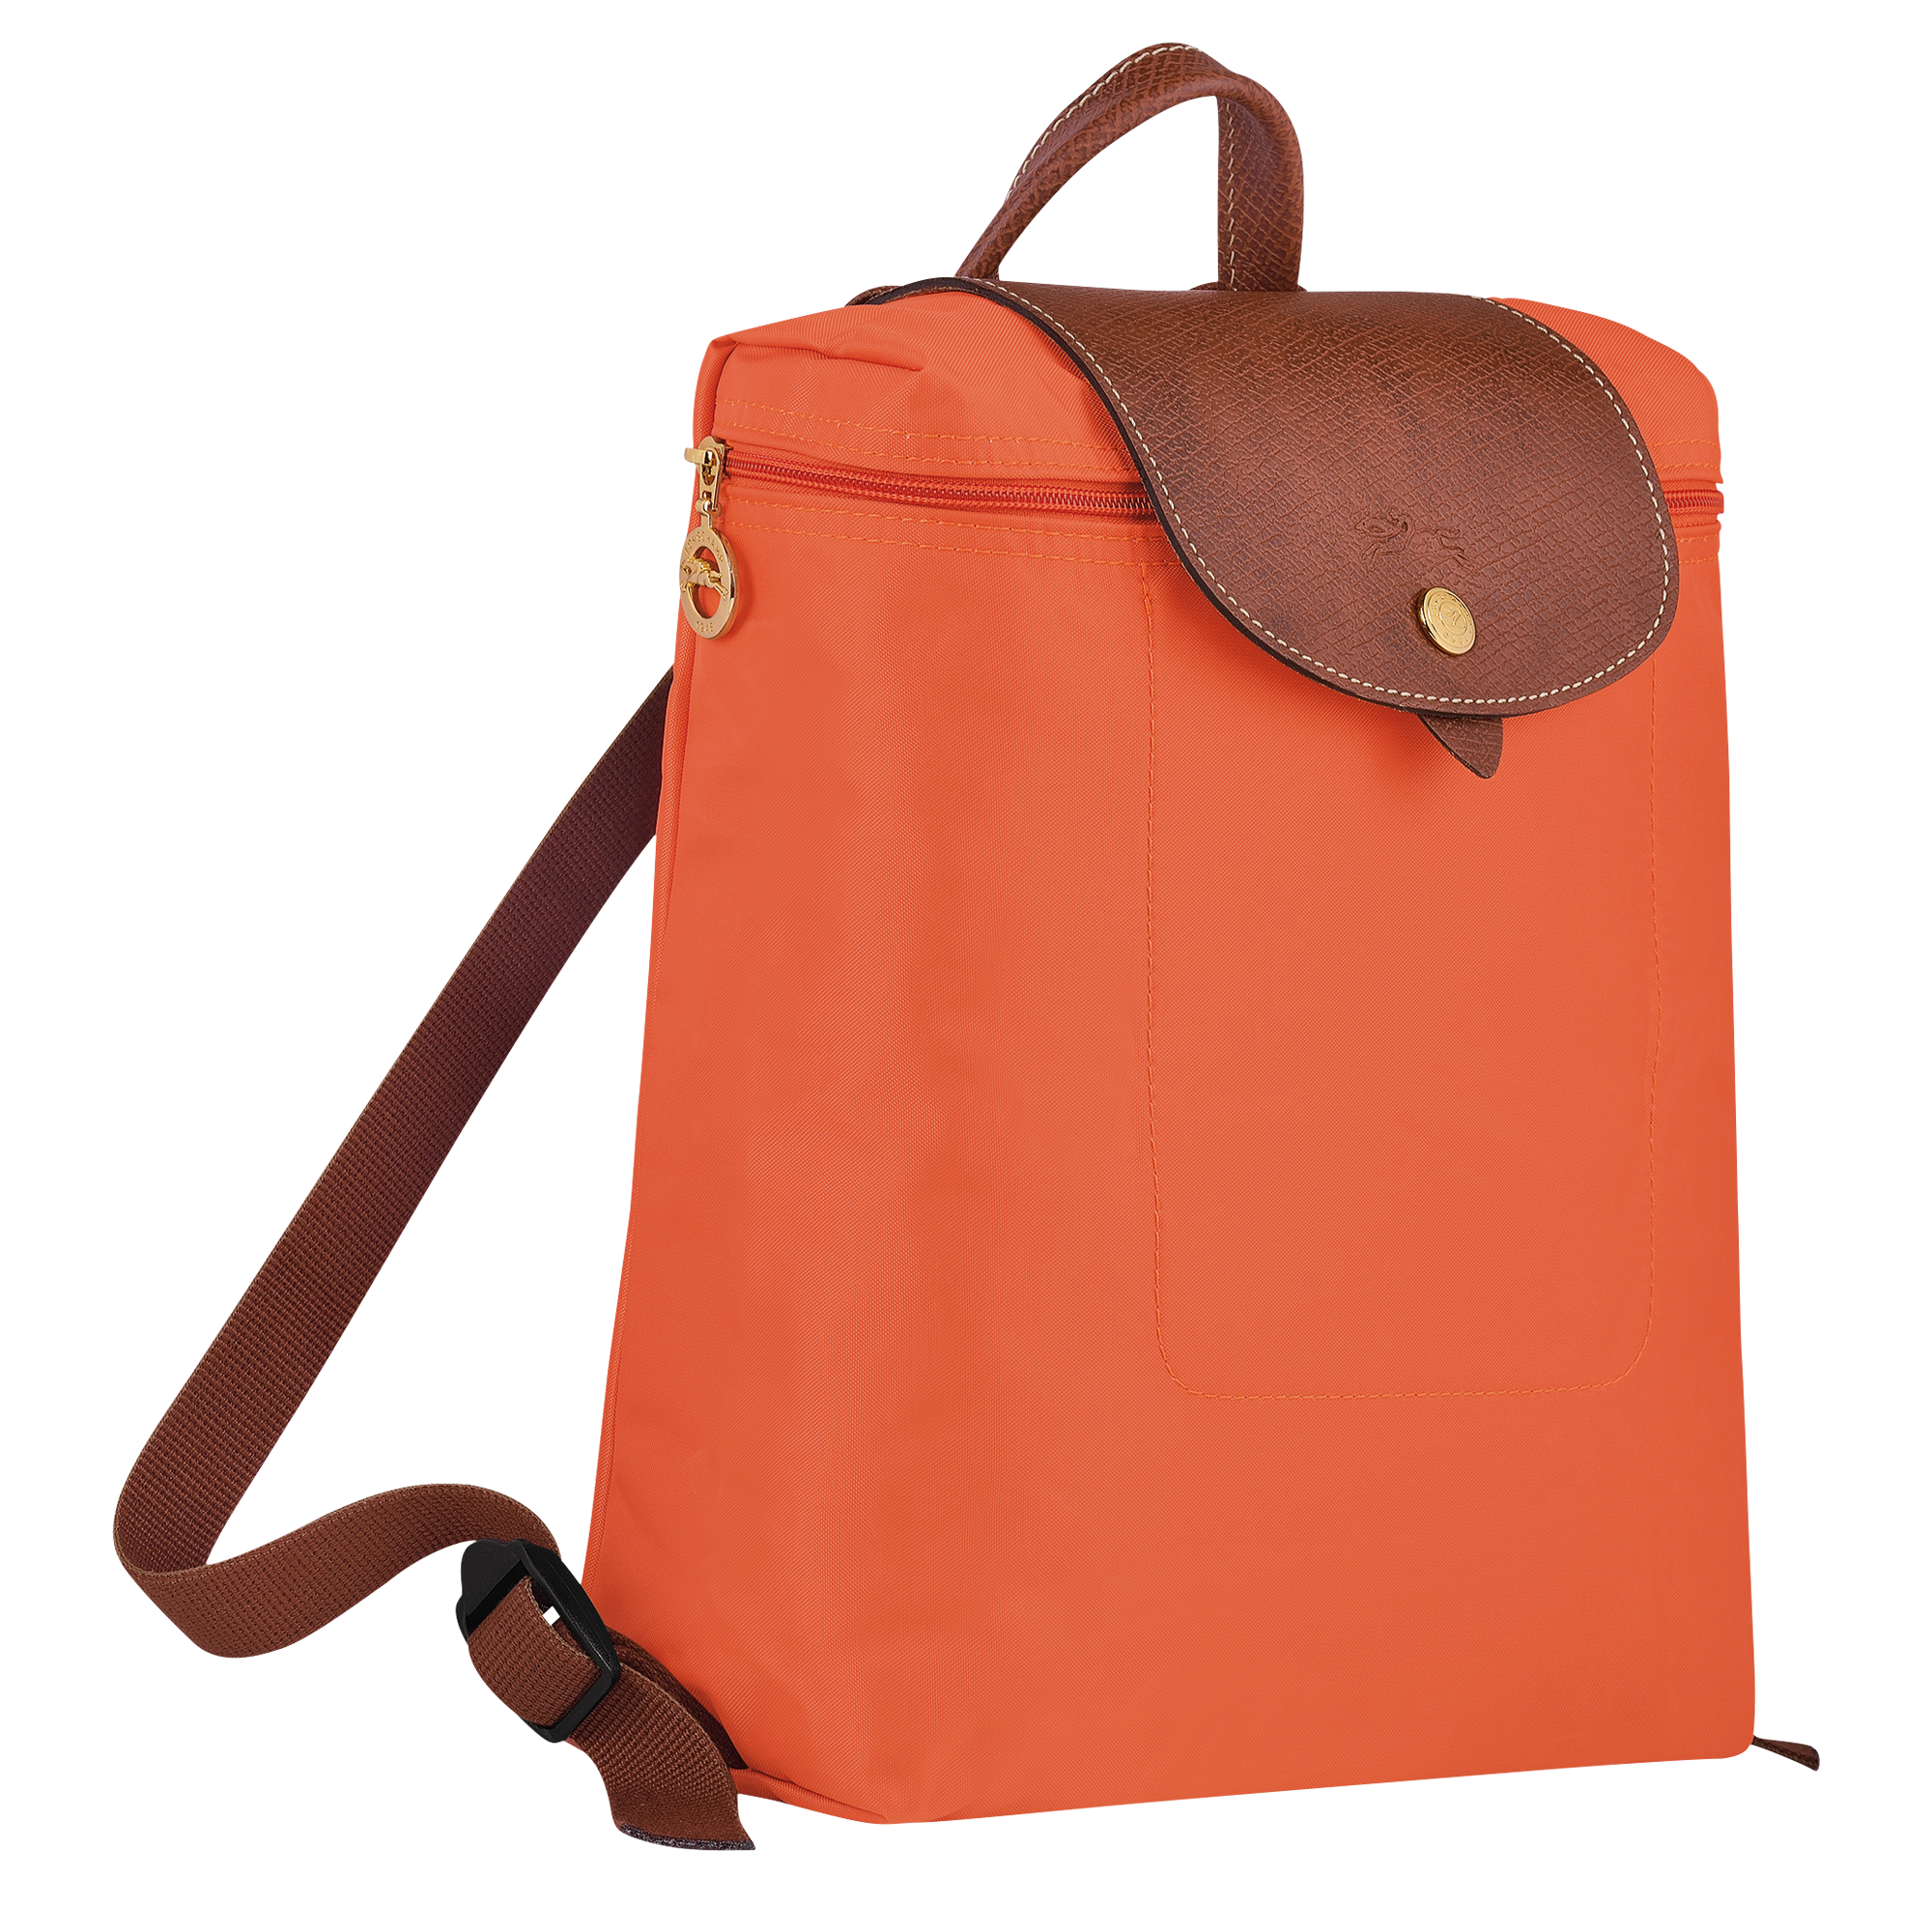 Le Pliage Original Backpack